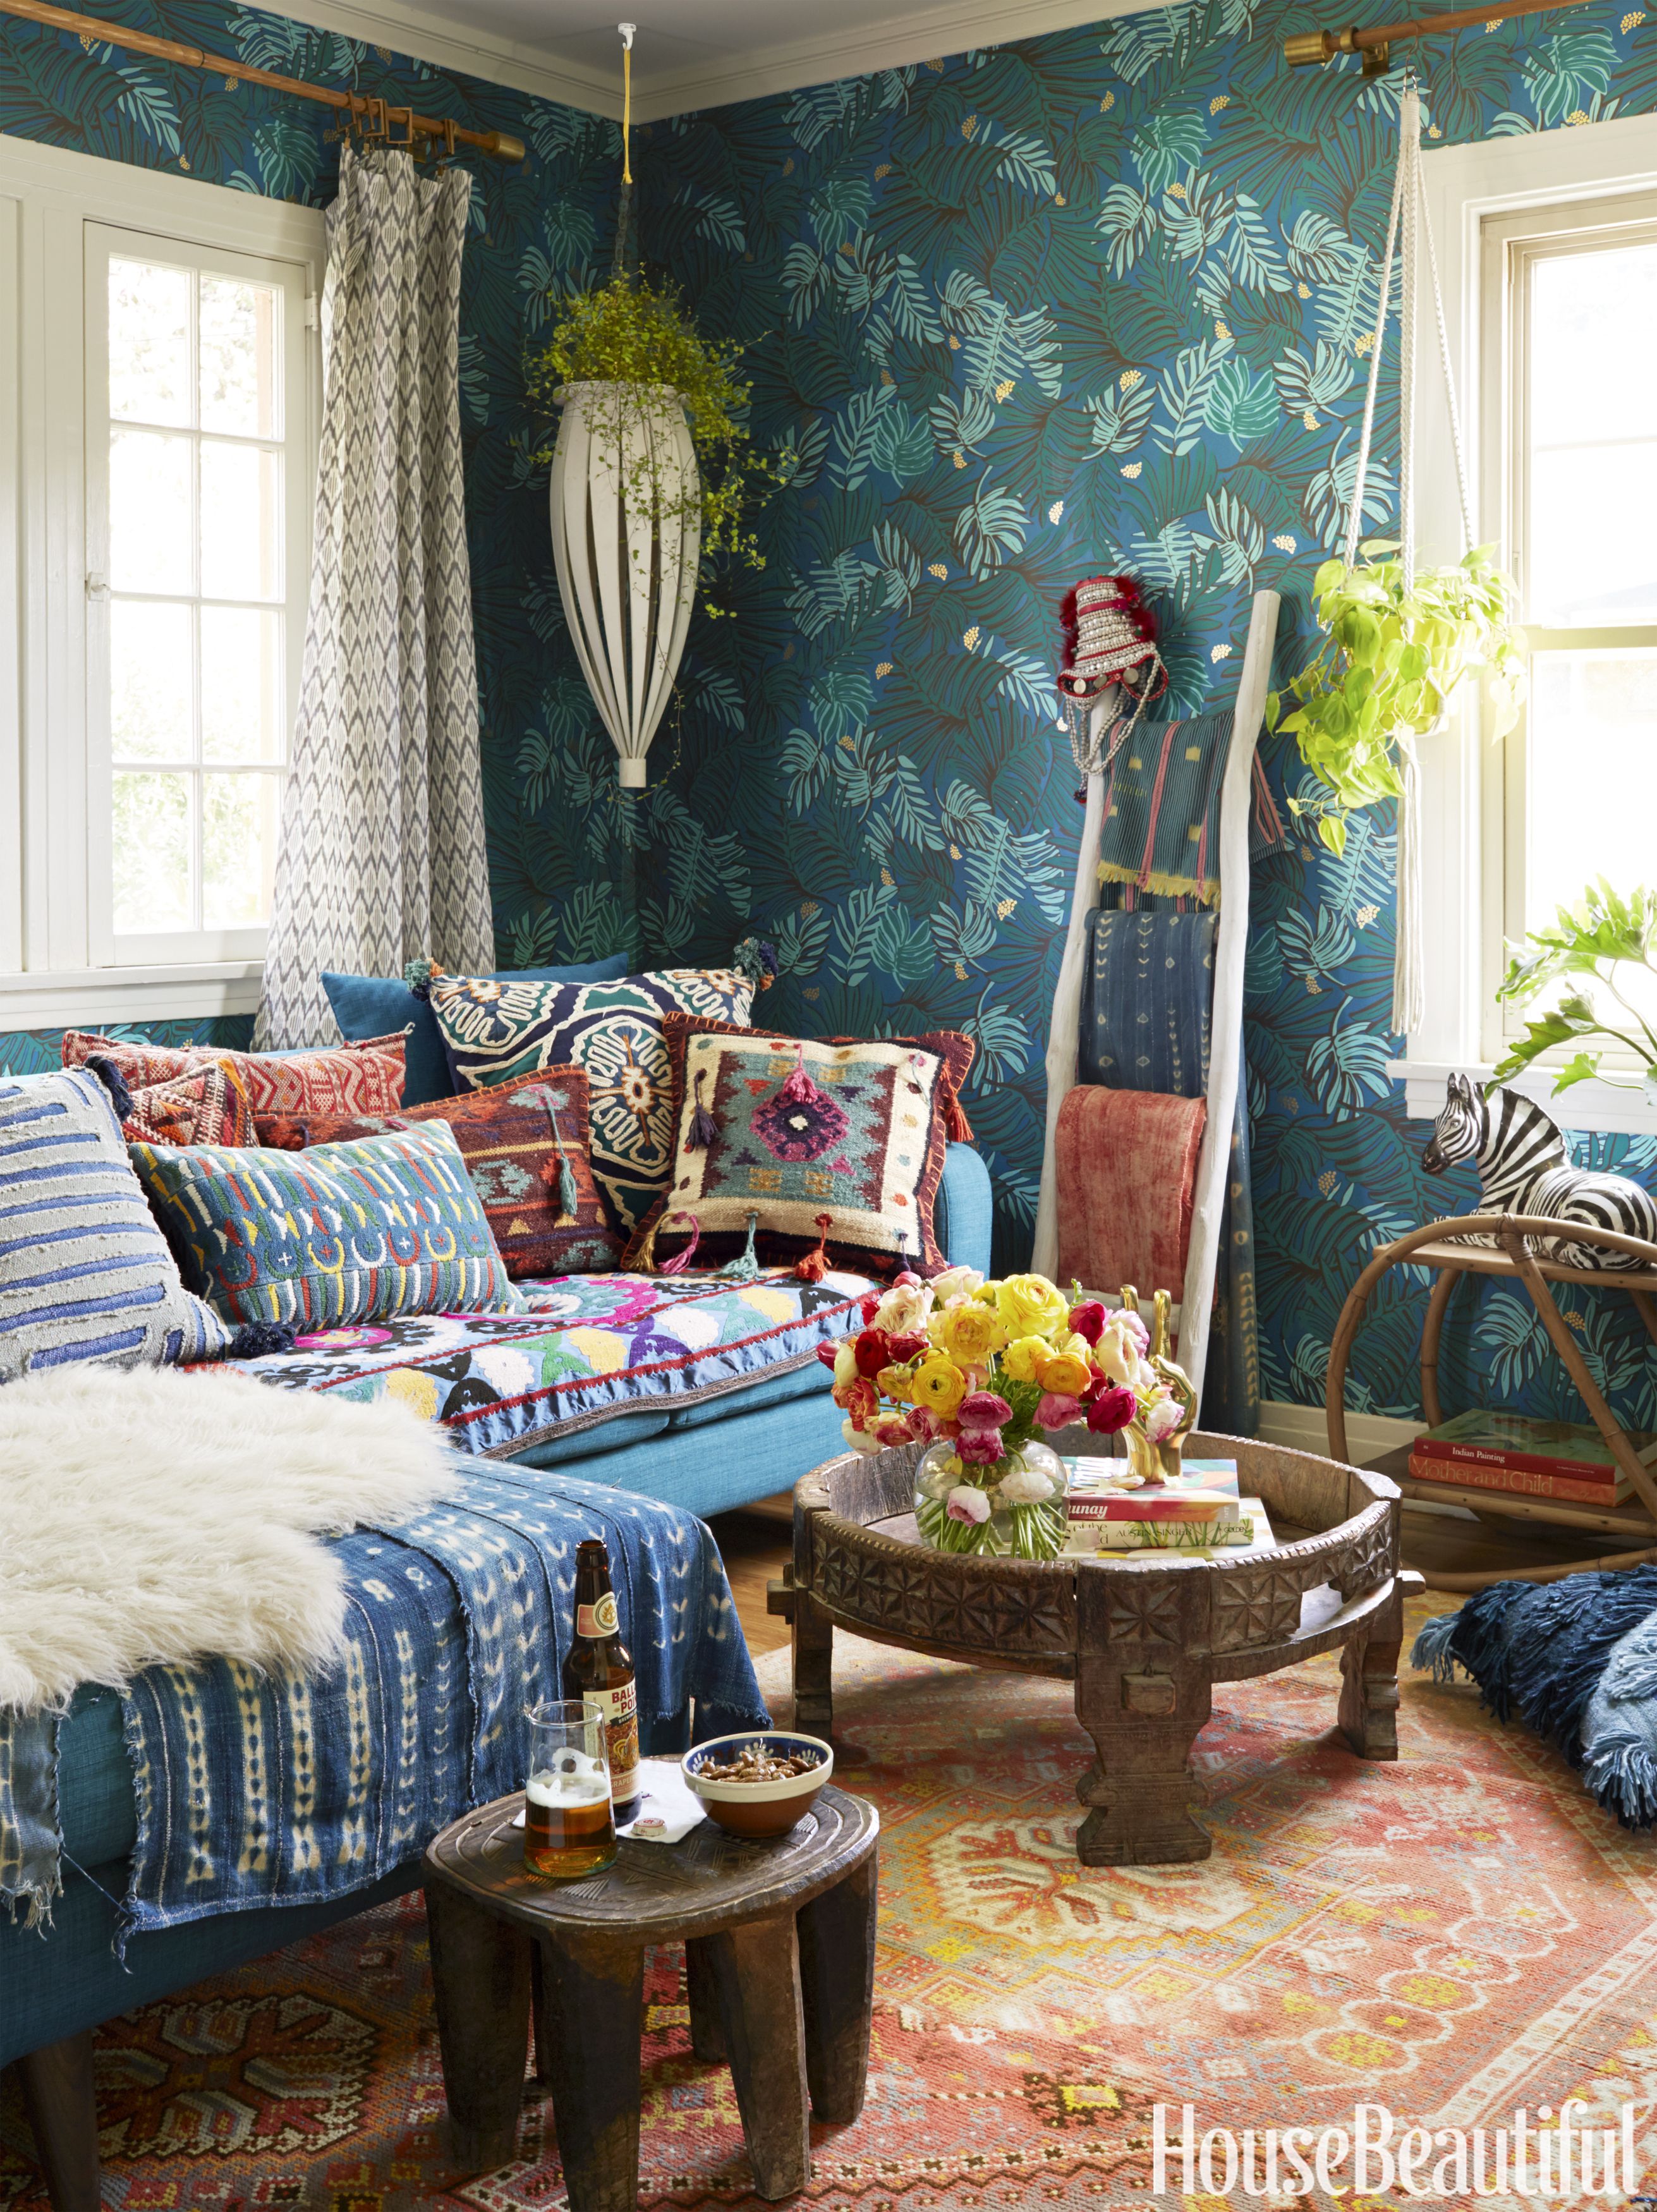 30 Bohemian Decor Ideas Boho Room Style Decorating And Inspiration - Bohemian Chic Room Decor Ideas